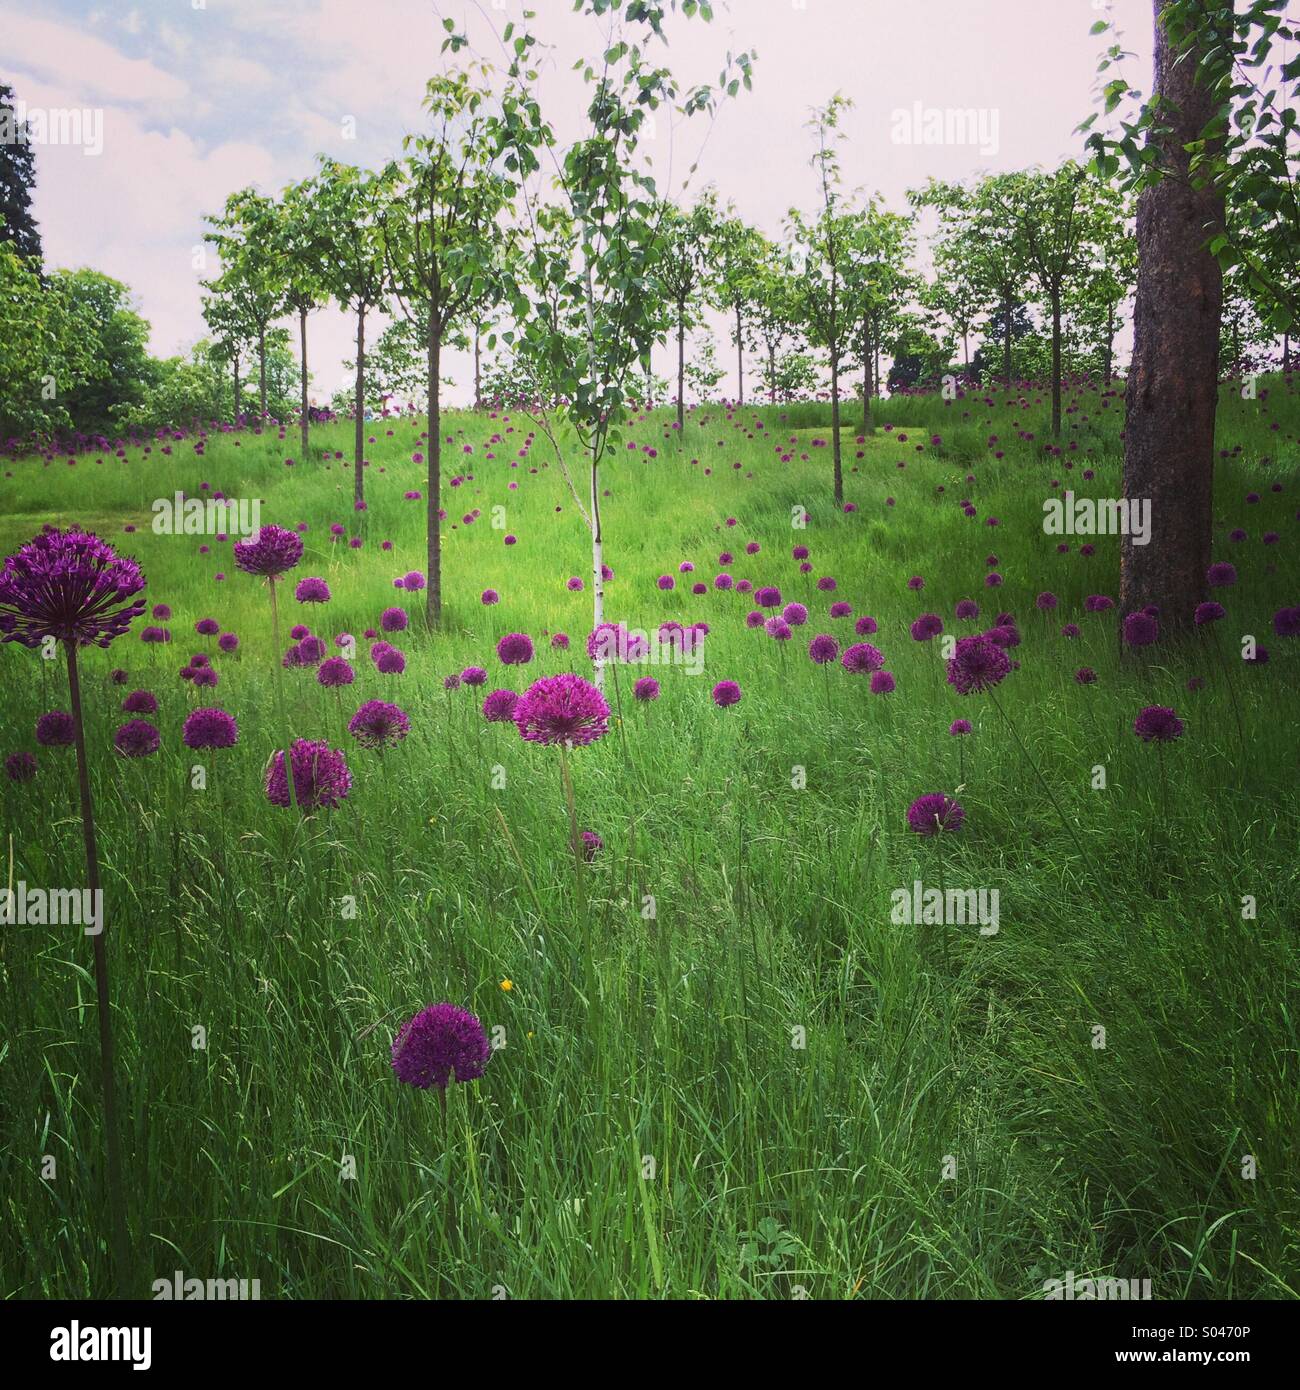 Allium garden Stock Photo